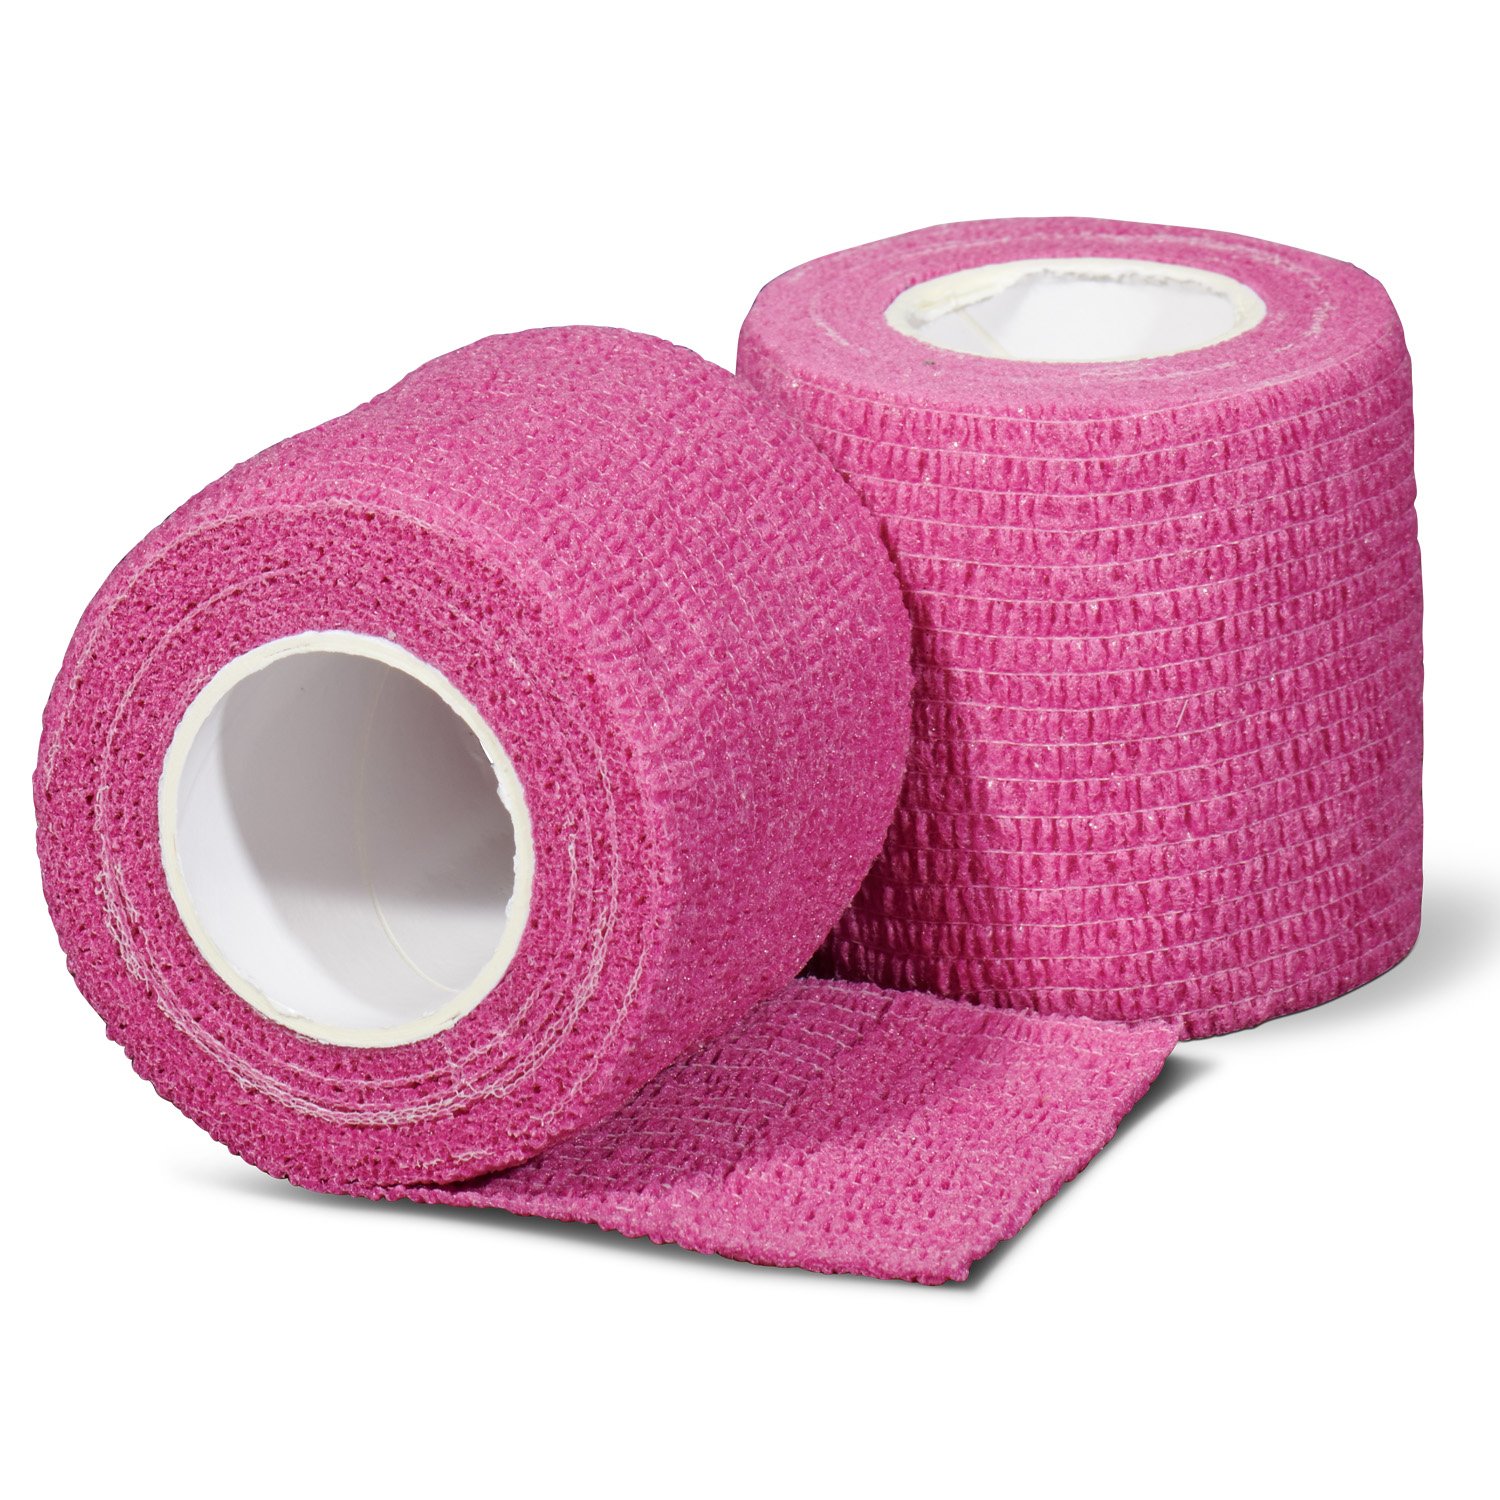 gladiator sports underwrap bandage per 12 rolls pink